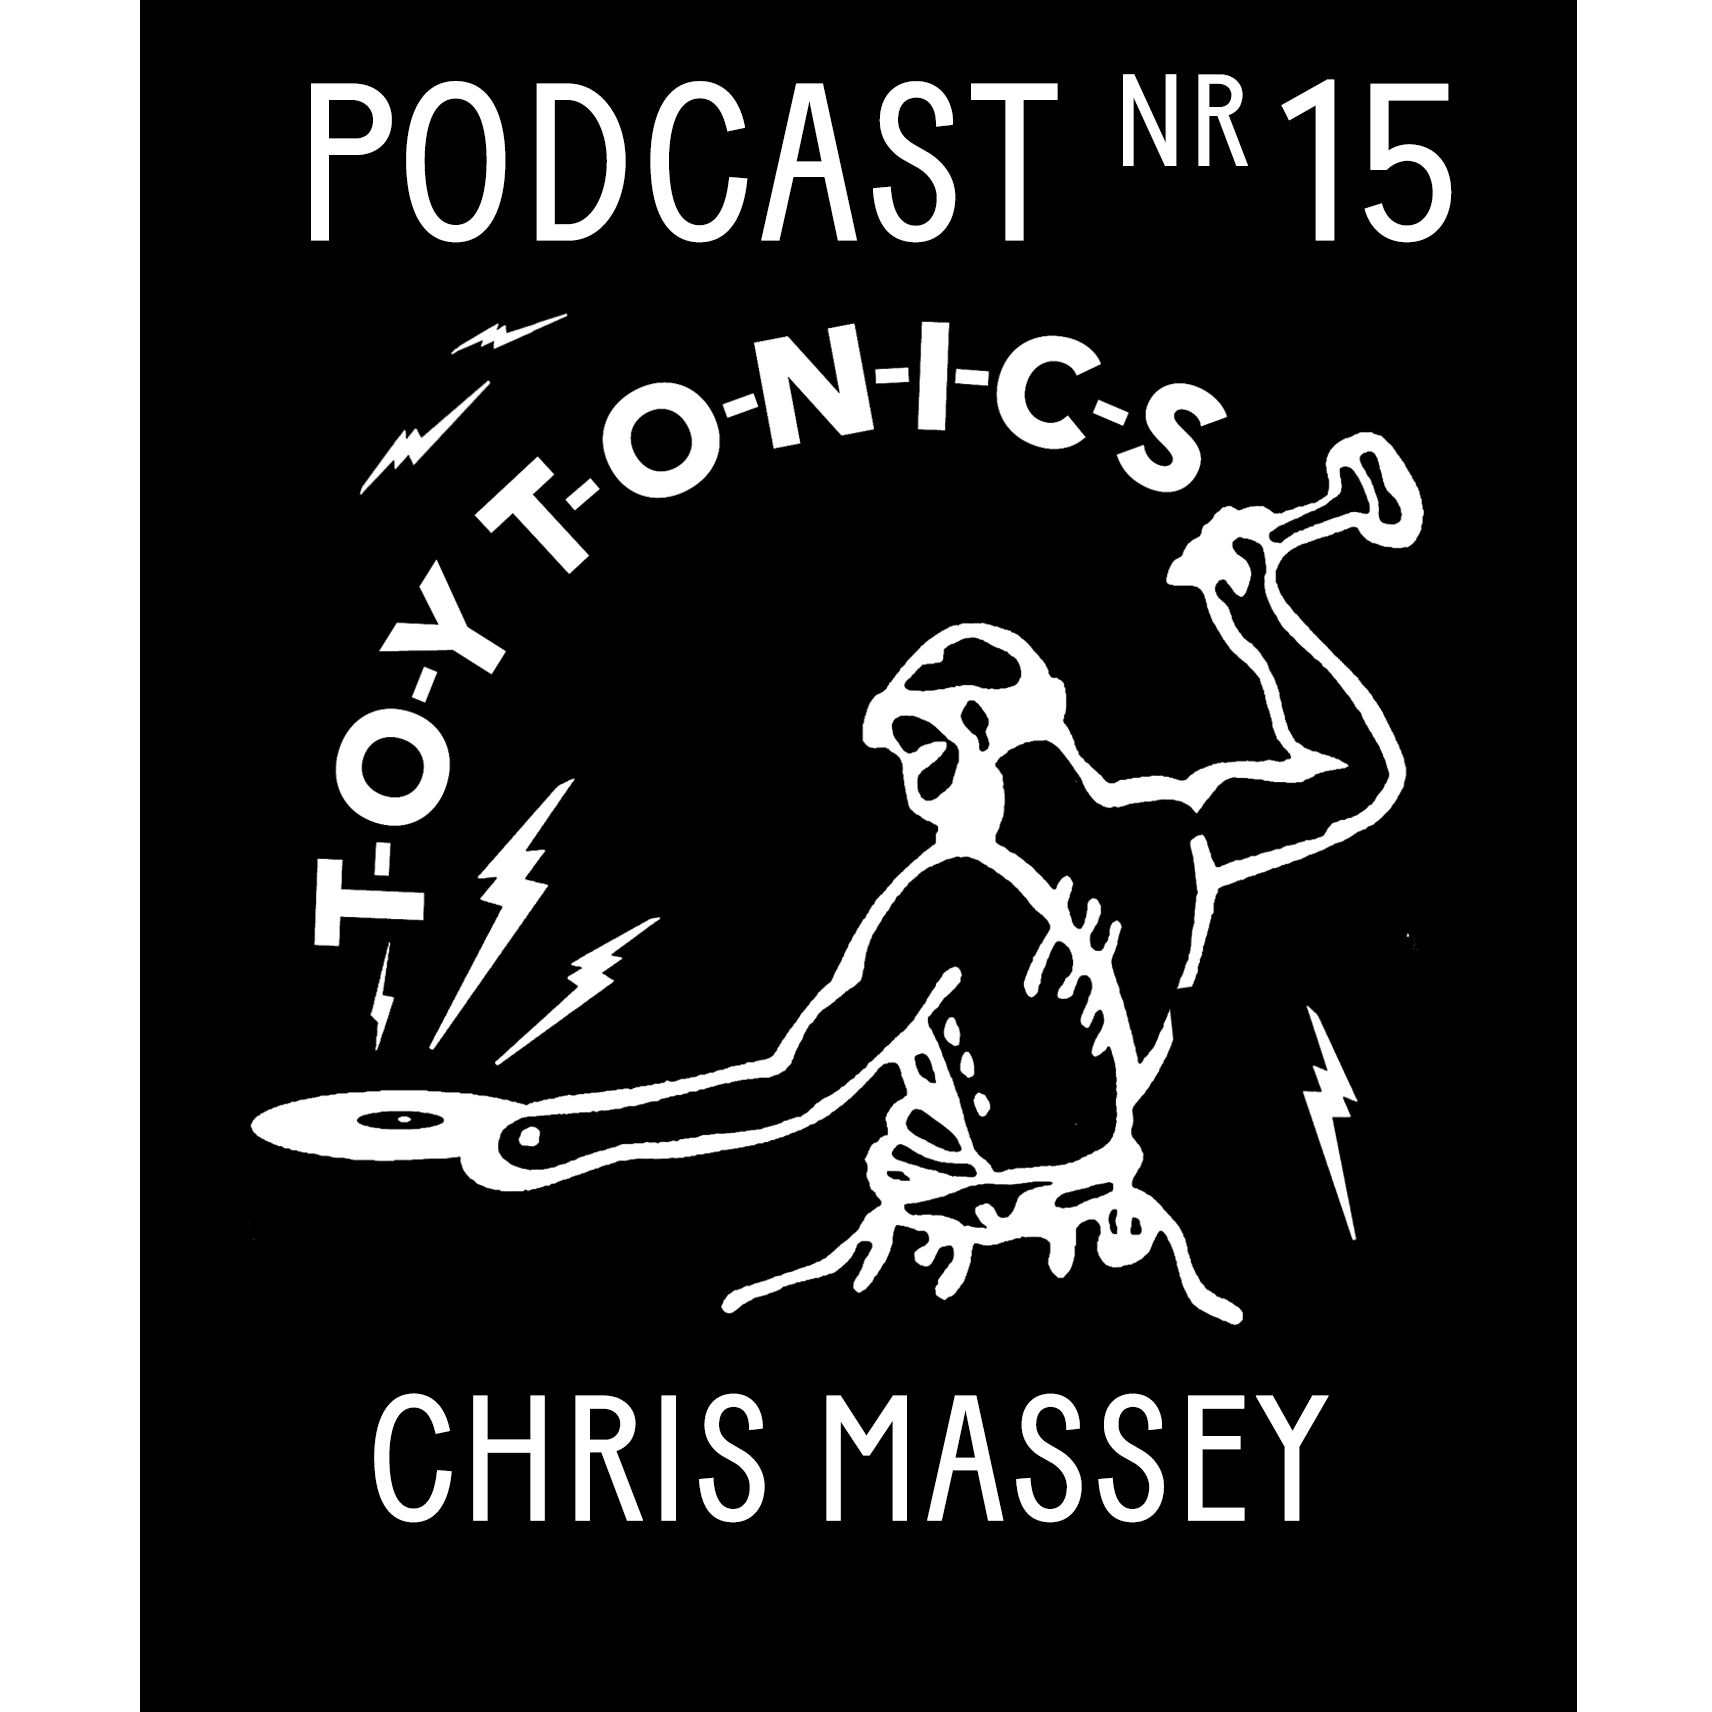 PODCAST NR 15 - Chris Massey